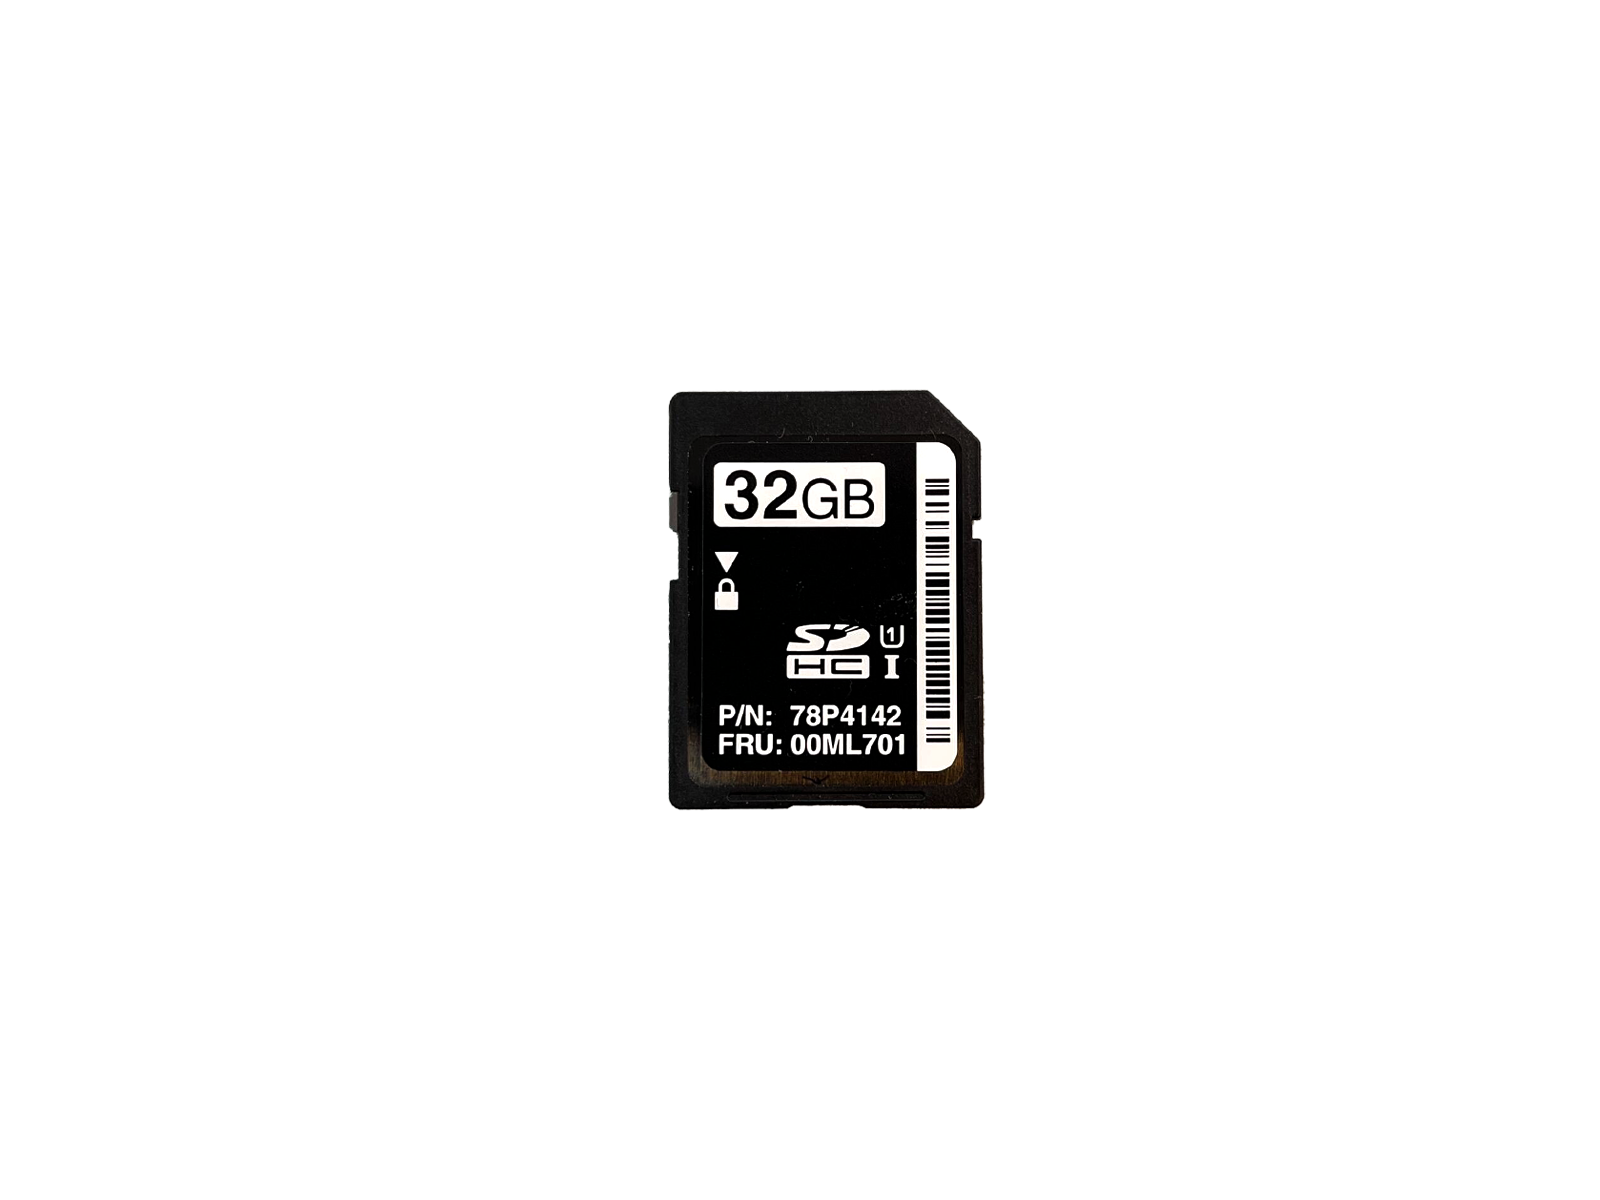 Lenovo 32GB SDHC Flash Memory SD Card 78P4142 00ML701 UHS-1 U1.